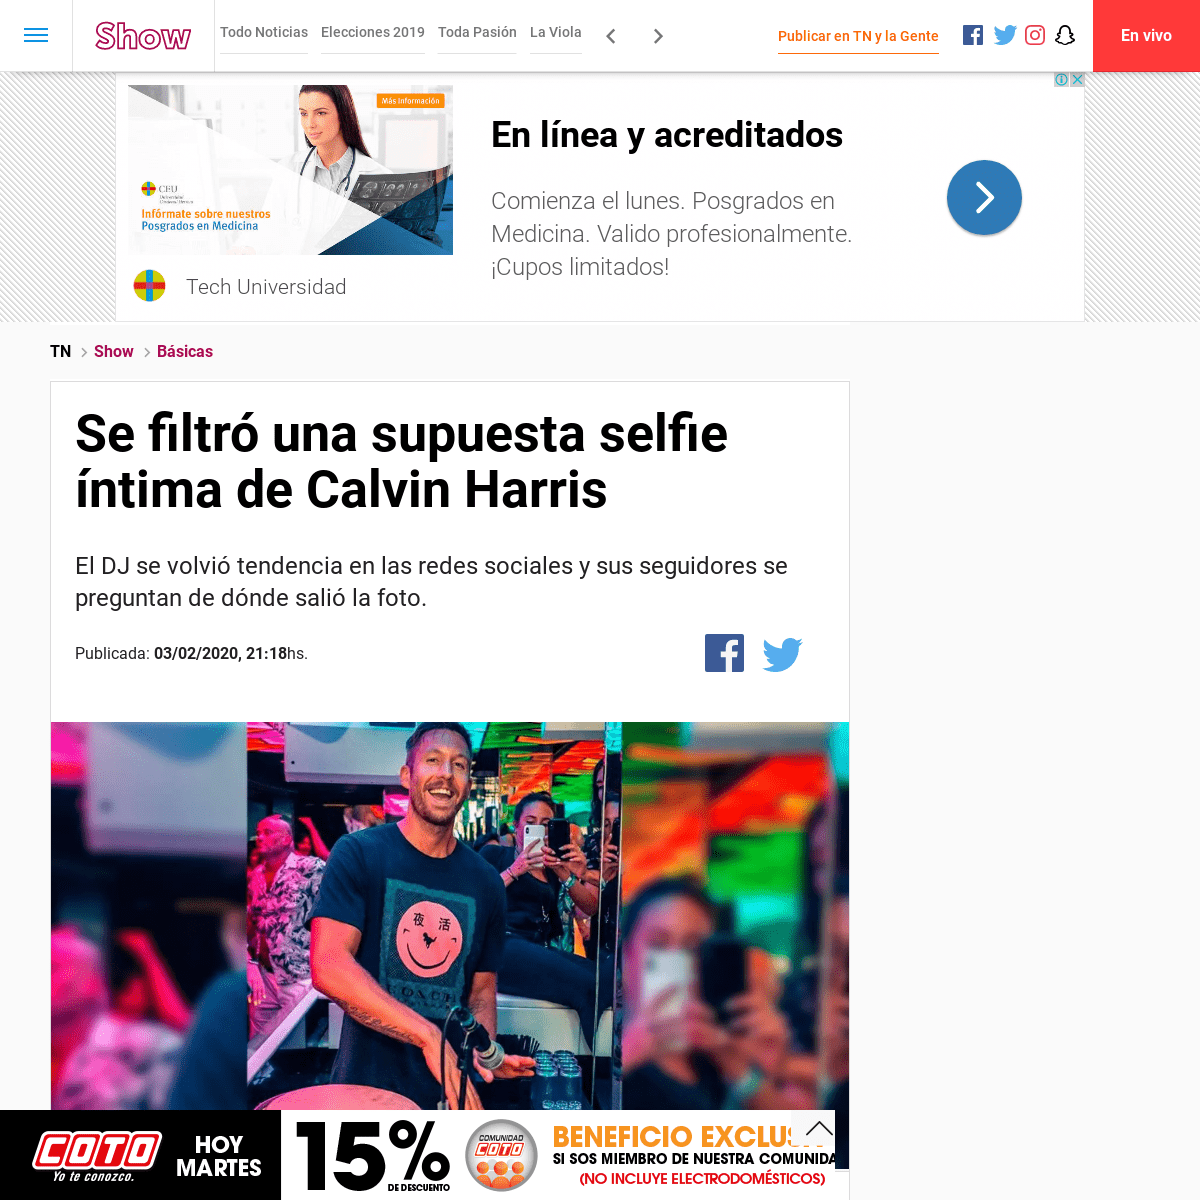 A complete backup of tn.com.ar/show/basicas/se-filtro-una-supuesta-selfie-intima-de-calvin-harris_1031182